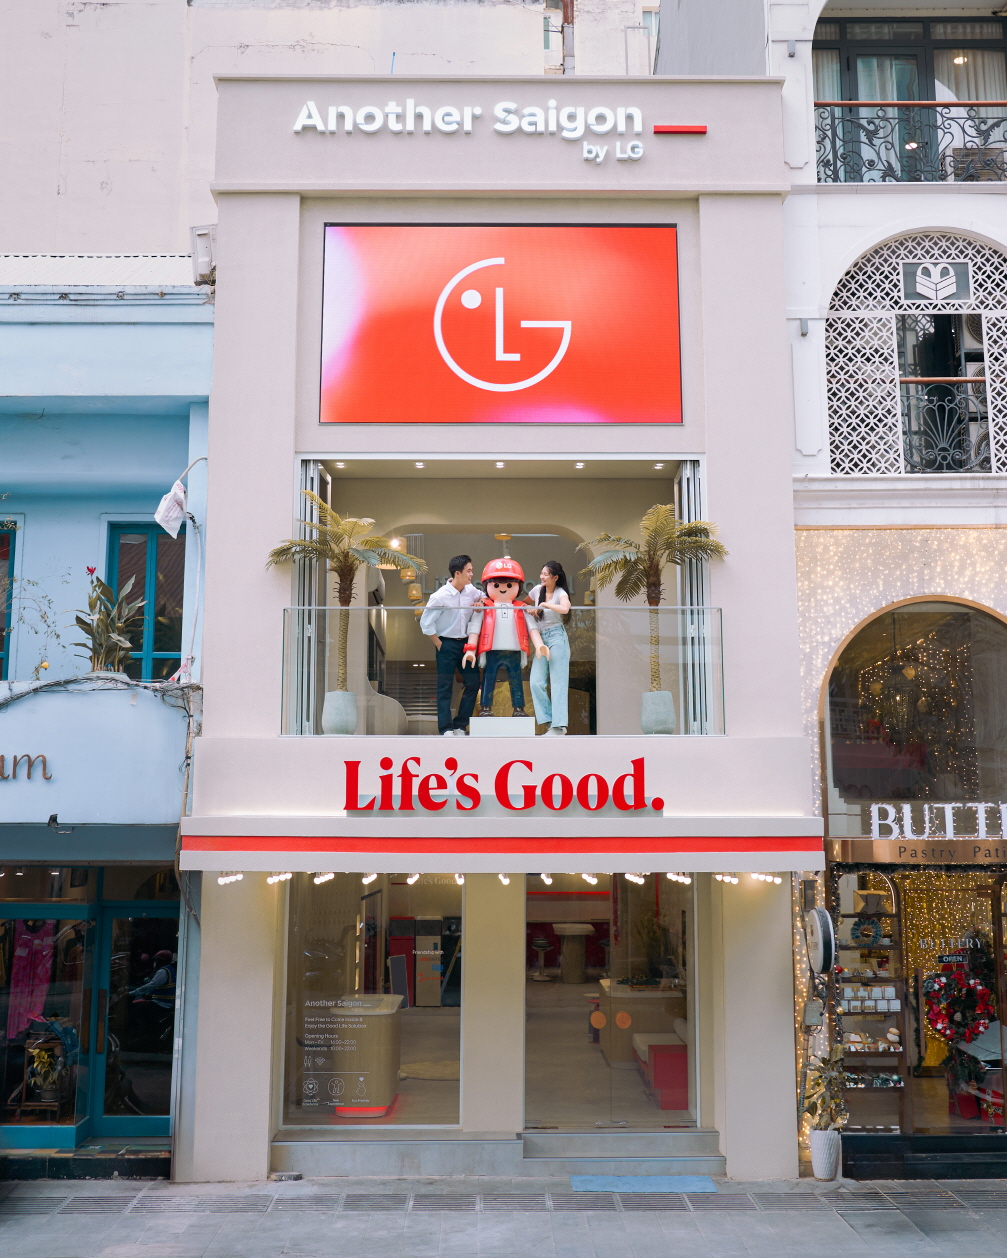  LG전자가 23일 베트남 호치민에 LG 가전만의 가치와 편리함을 체험하는 고객경험 공간 ‘어나더사이공(Another Saigon)’을 선보인다. LG전자는 베트남 고객들에게 더 나은 삶과 미래에 대한 낙관적 메시지를 담은 LG전자 브랜드 슬로건 ‘Life’s Good’을 알린다.